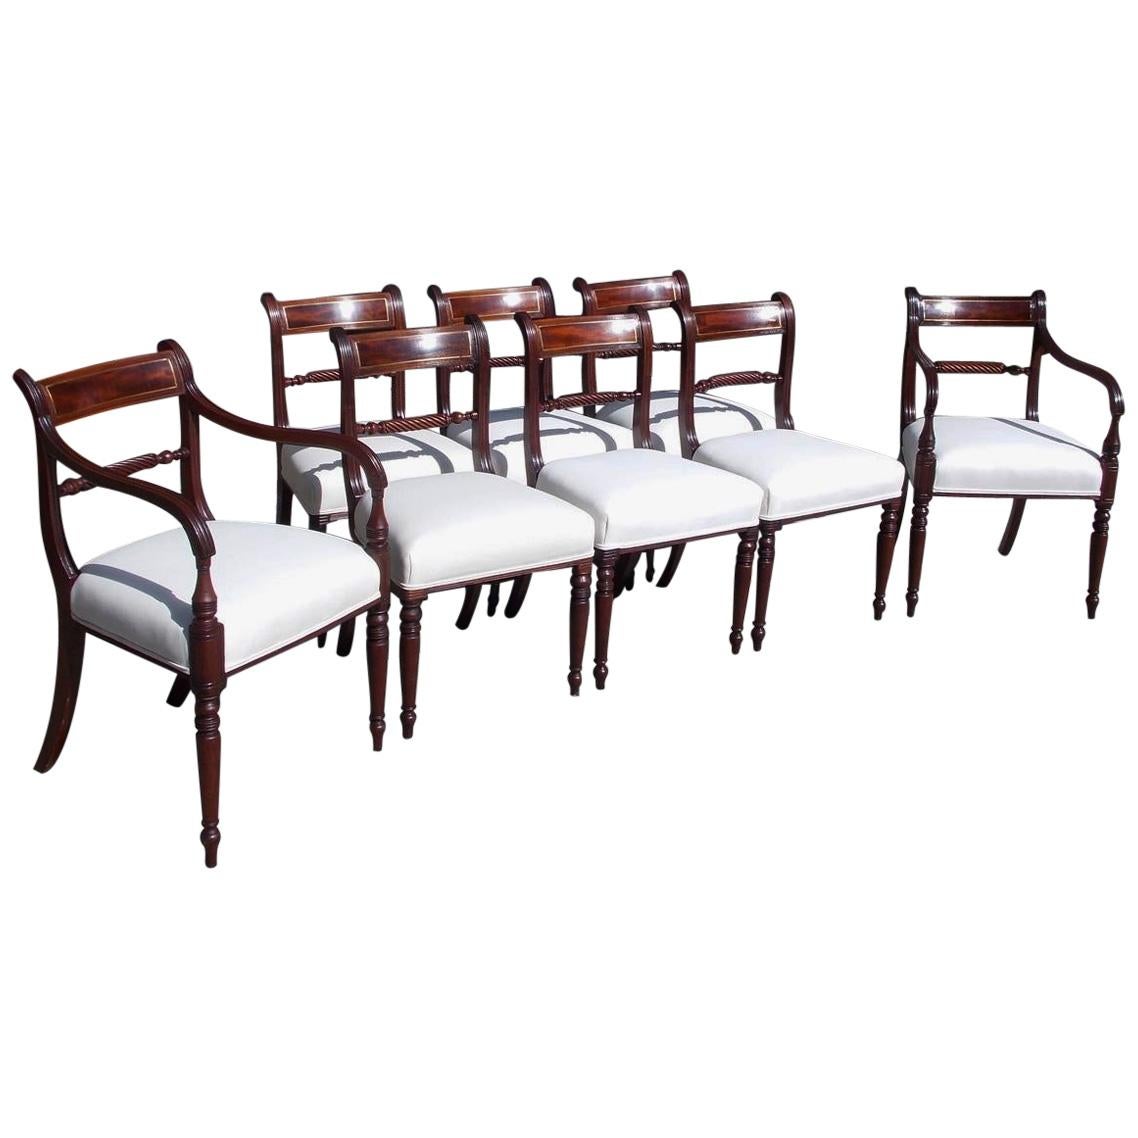 Set of Eight English Regency Mahogany Brass Inlaid Dining Room Chairs C. 1810